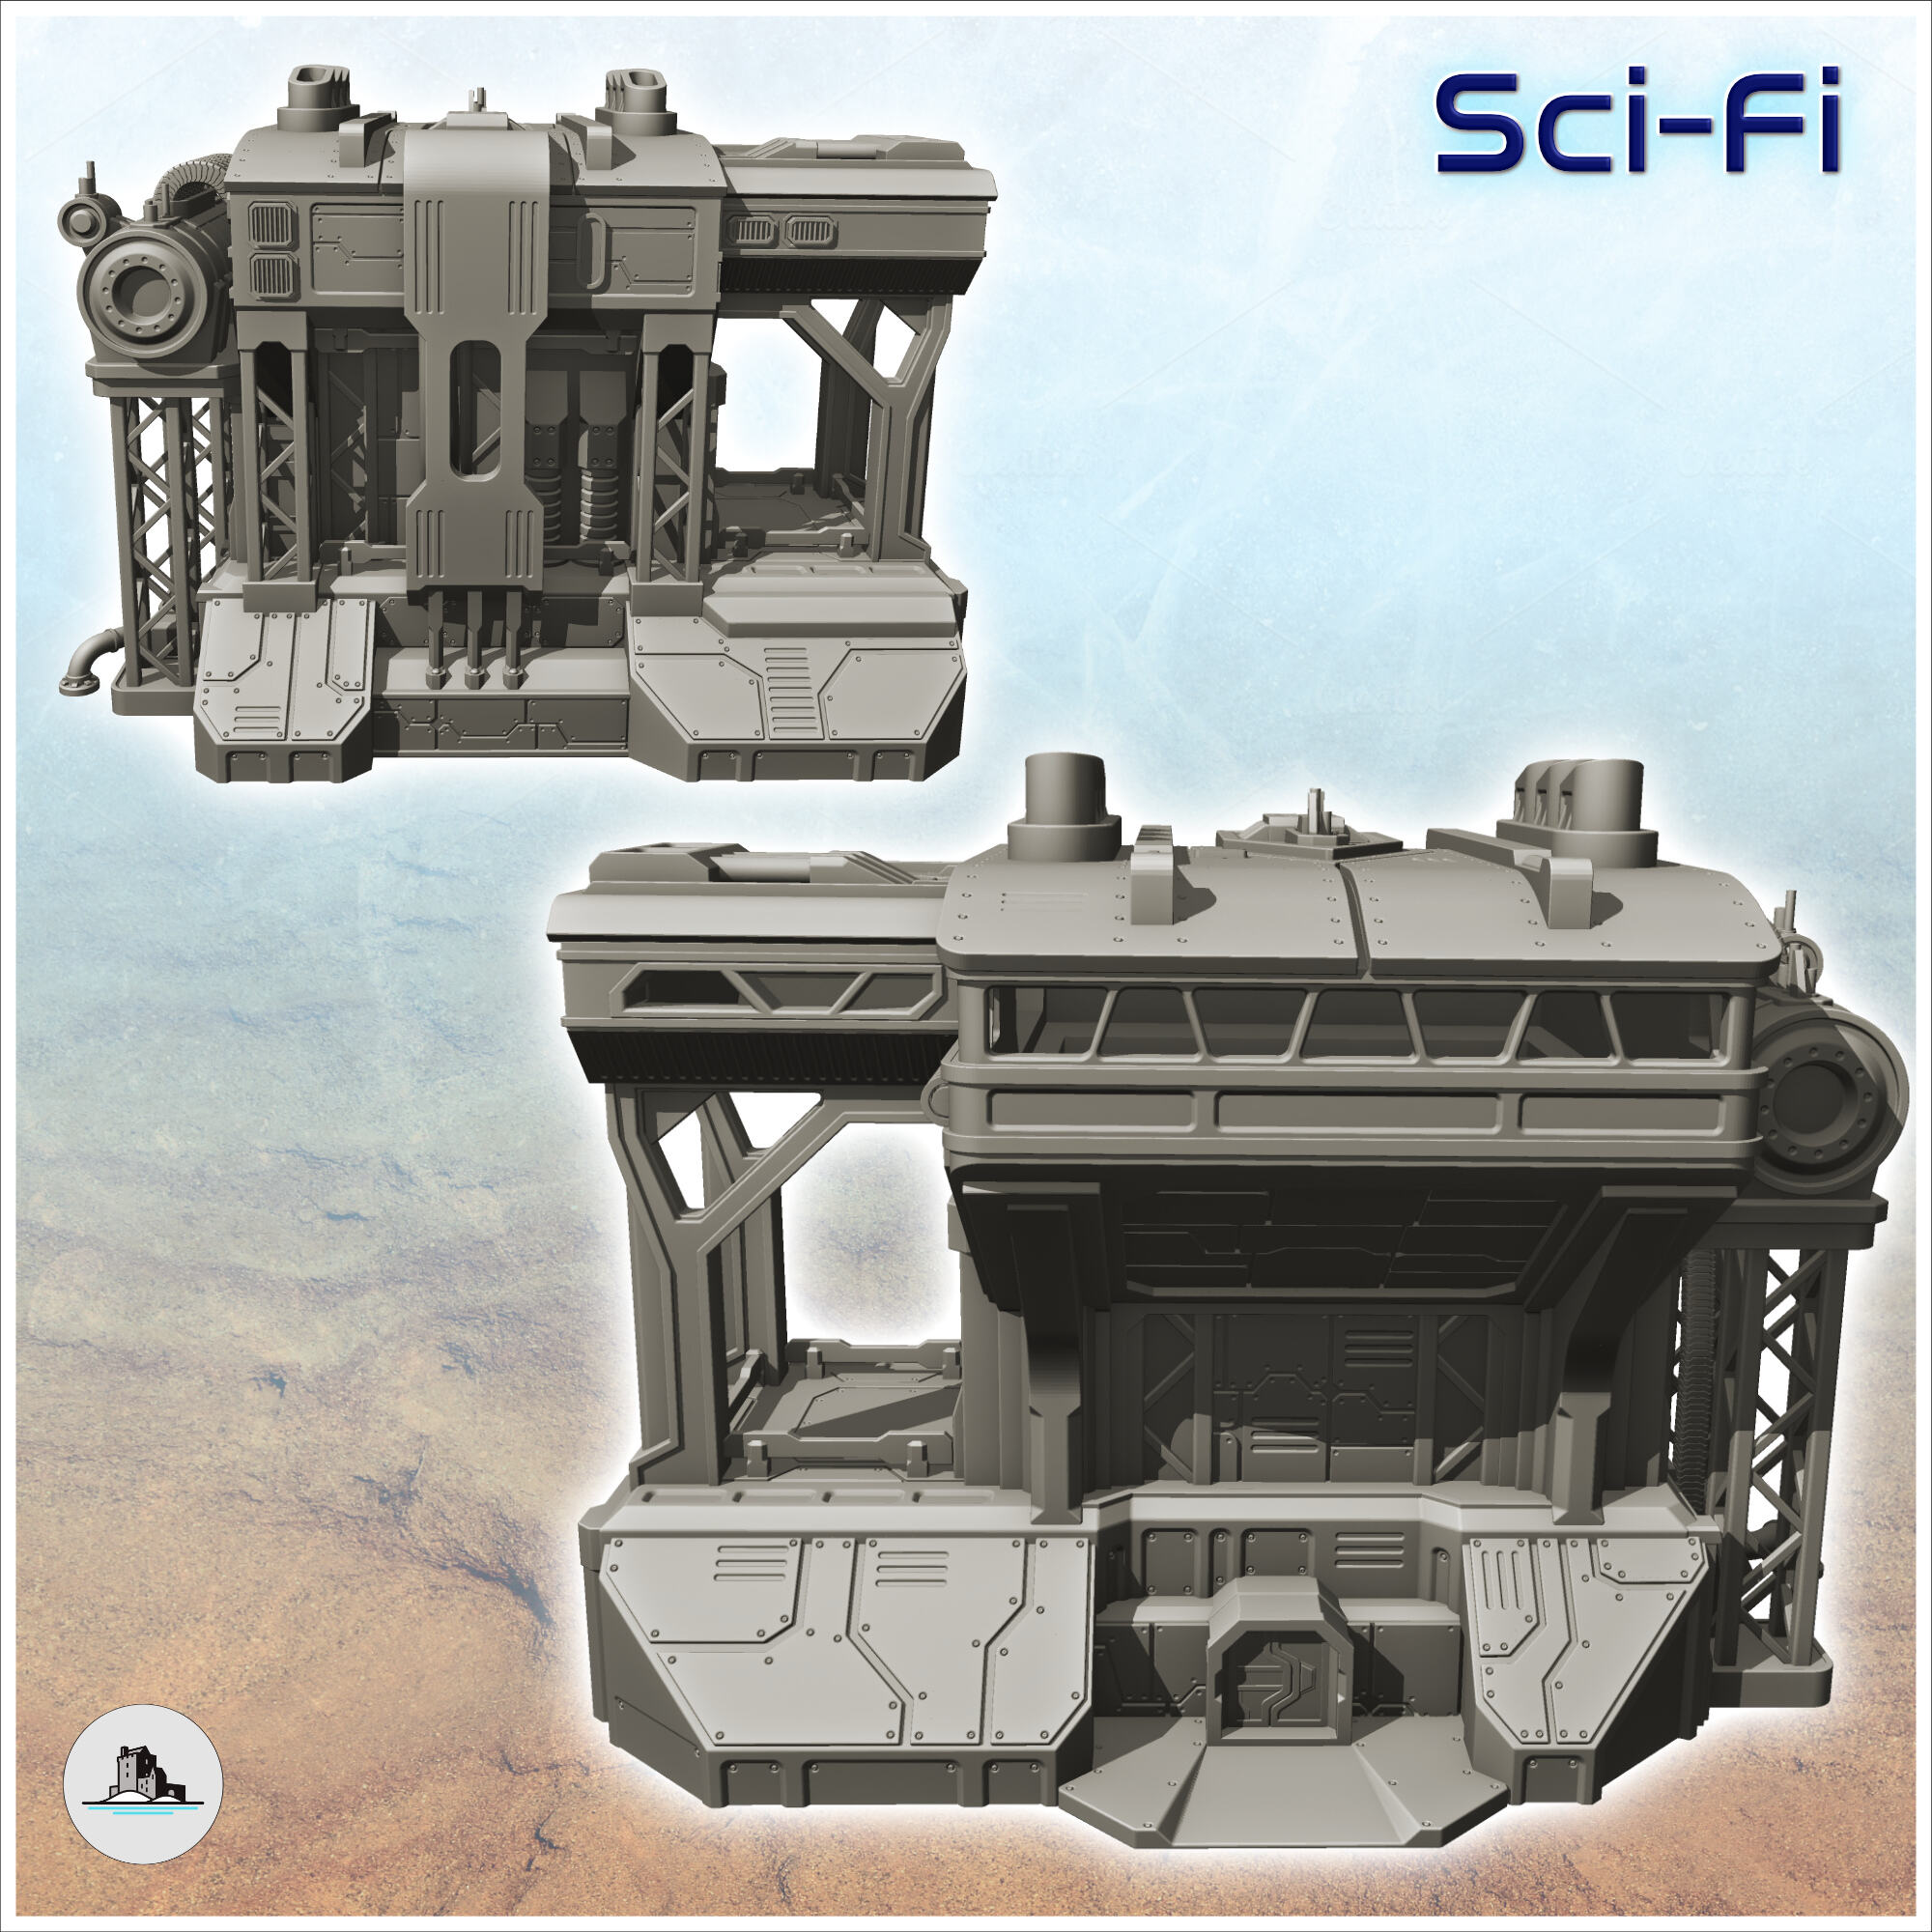 Large Sci-Fi production - Terrain Scifi Science fiction SF